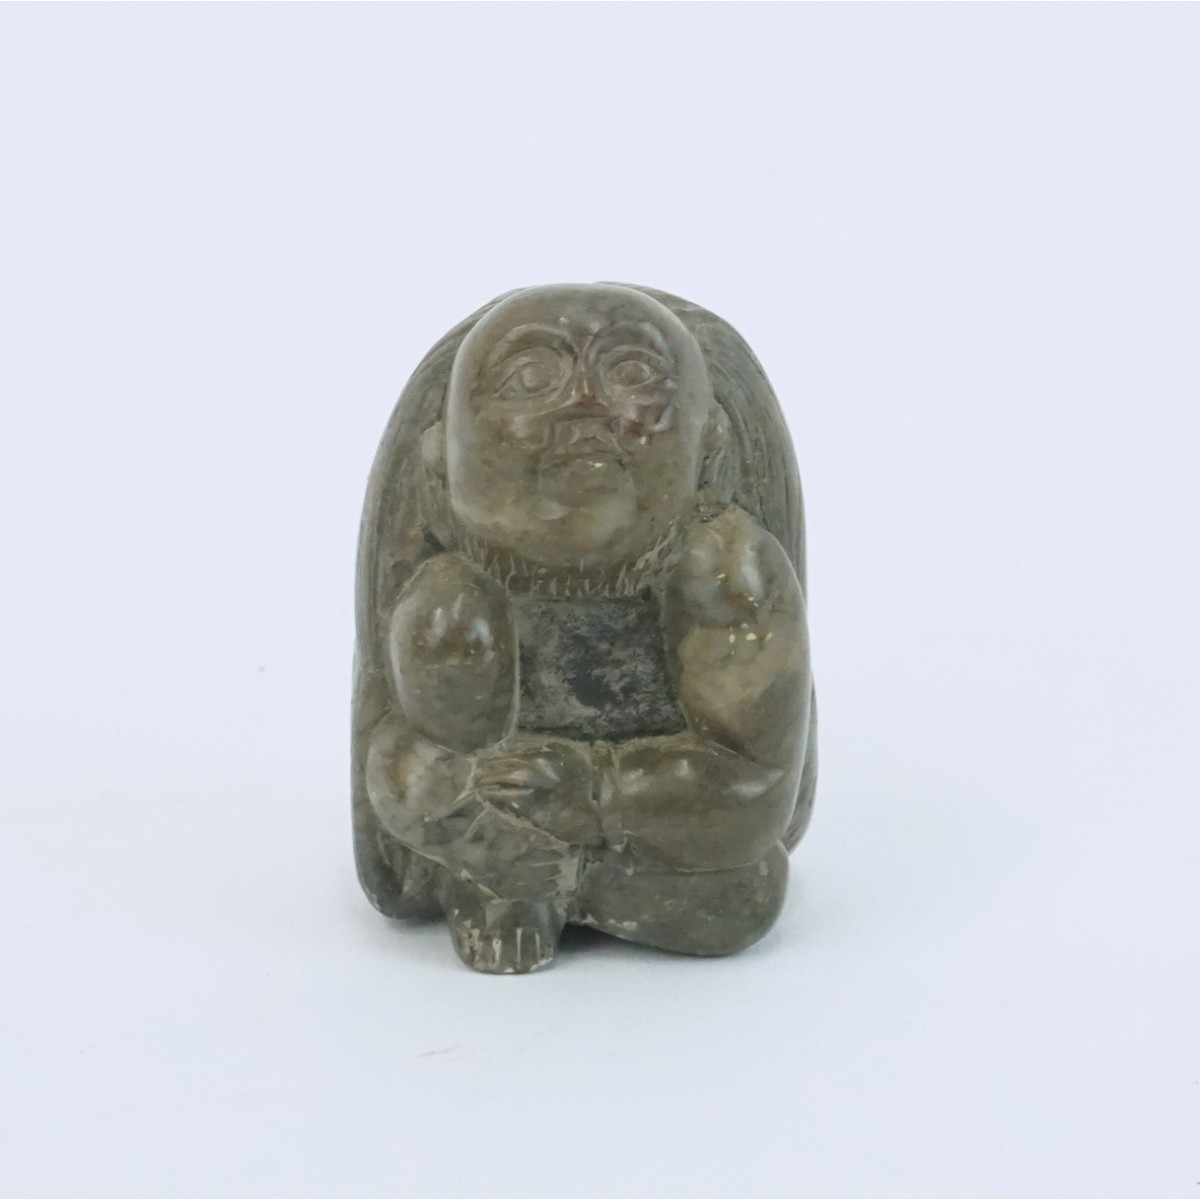 5 Chinese Hardstone Figurines